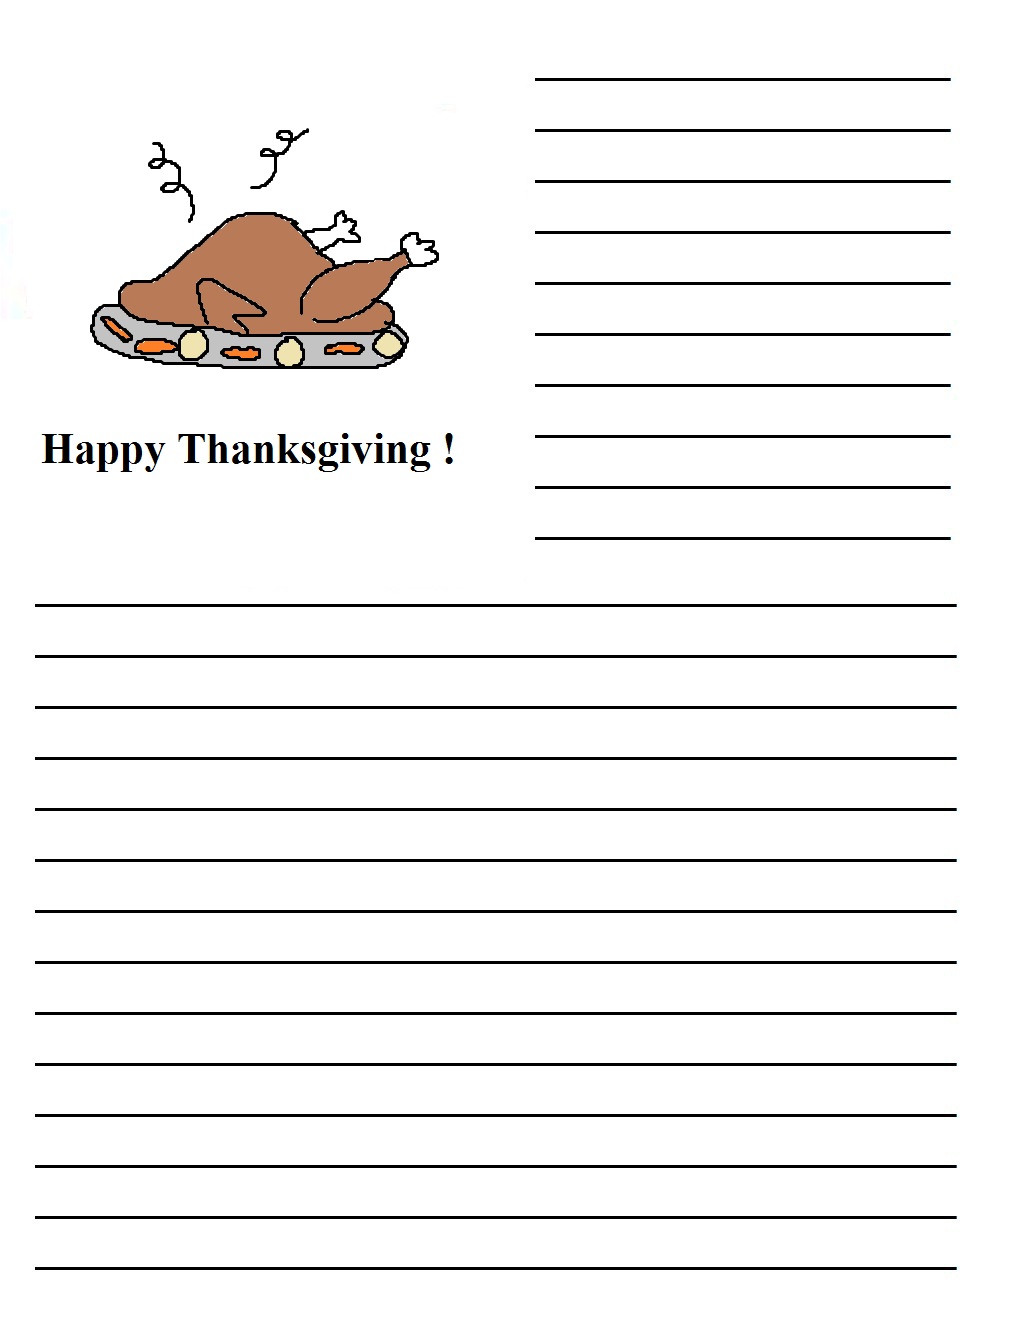 thanksgiving-writing-paper-free-printable-printable-templates